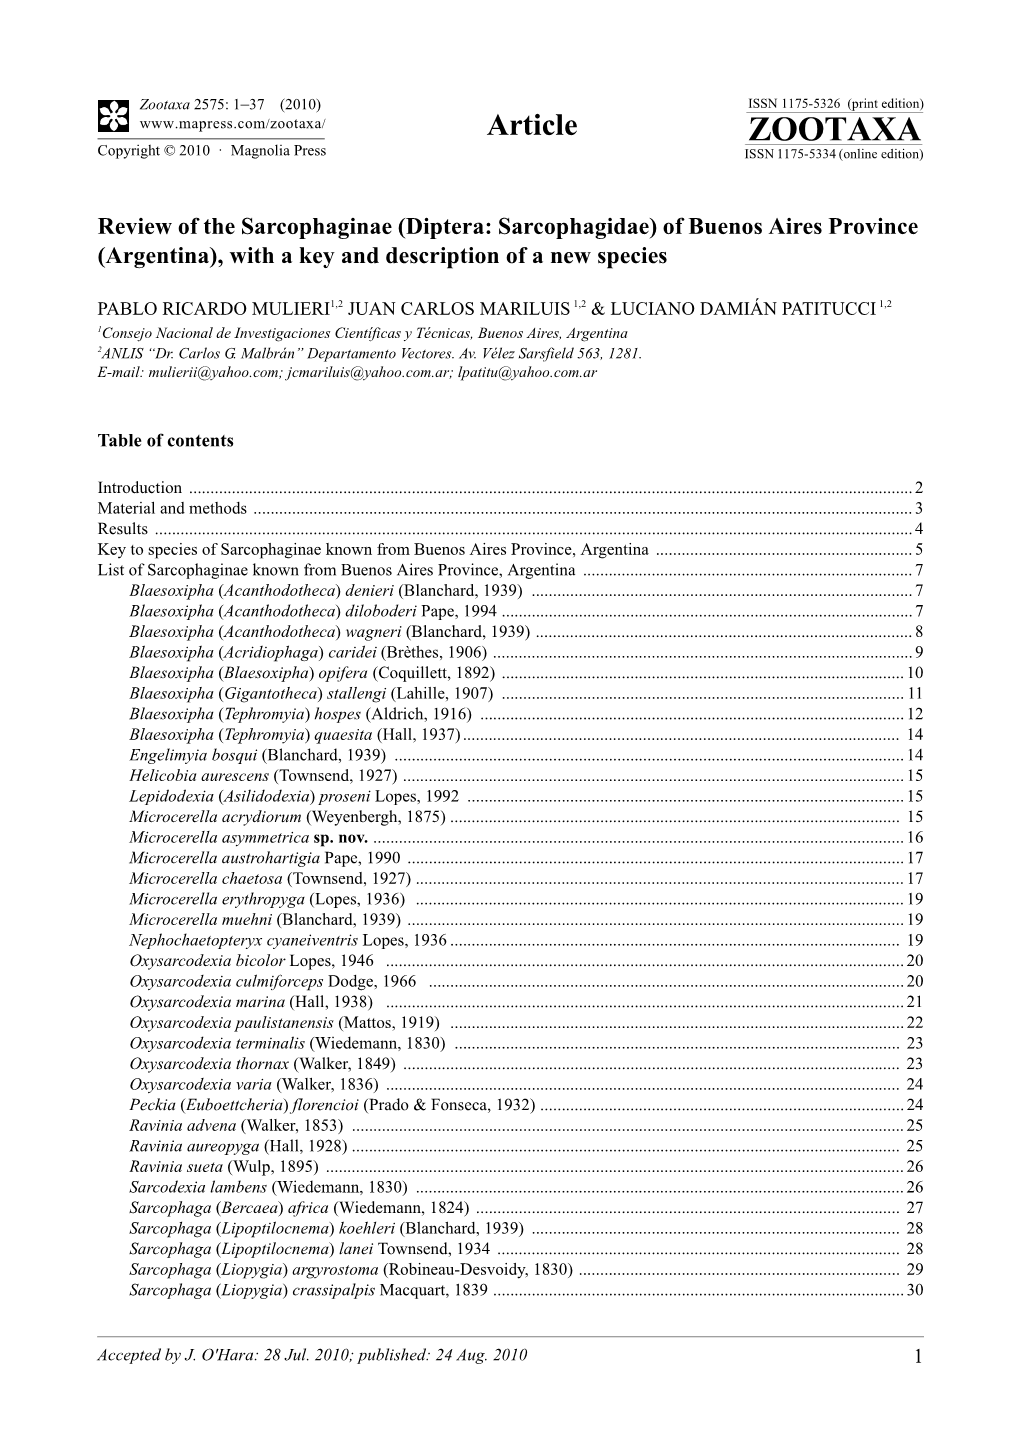 Zootaxa, Review of the Sarcophaginae (Diptera